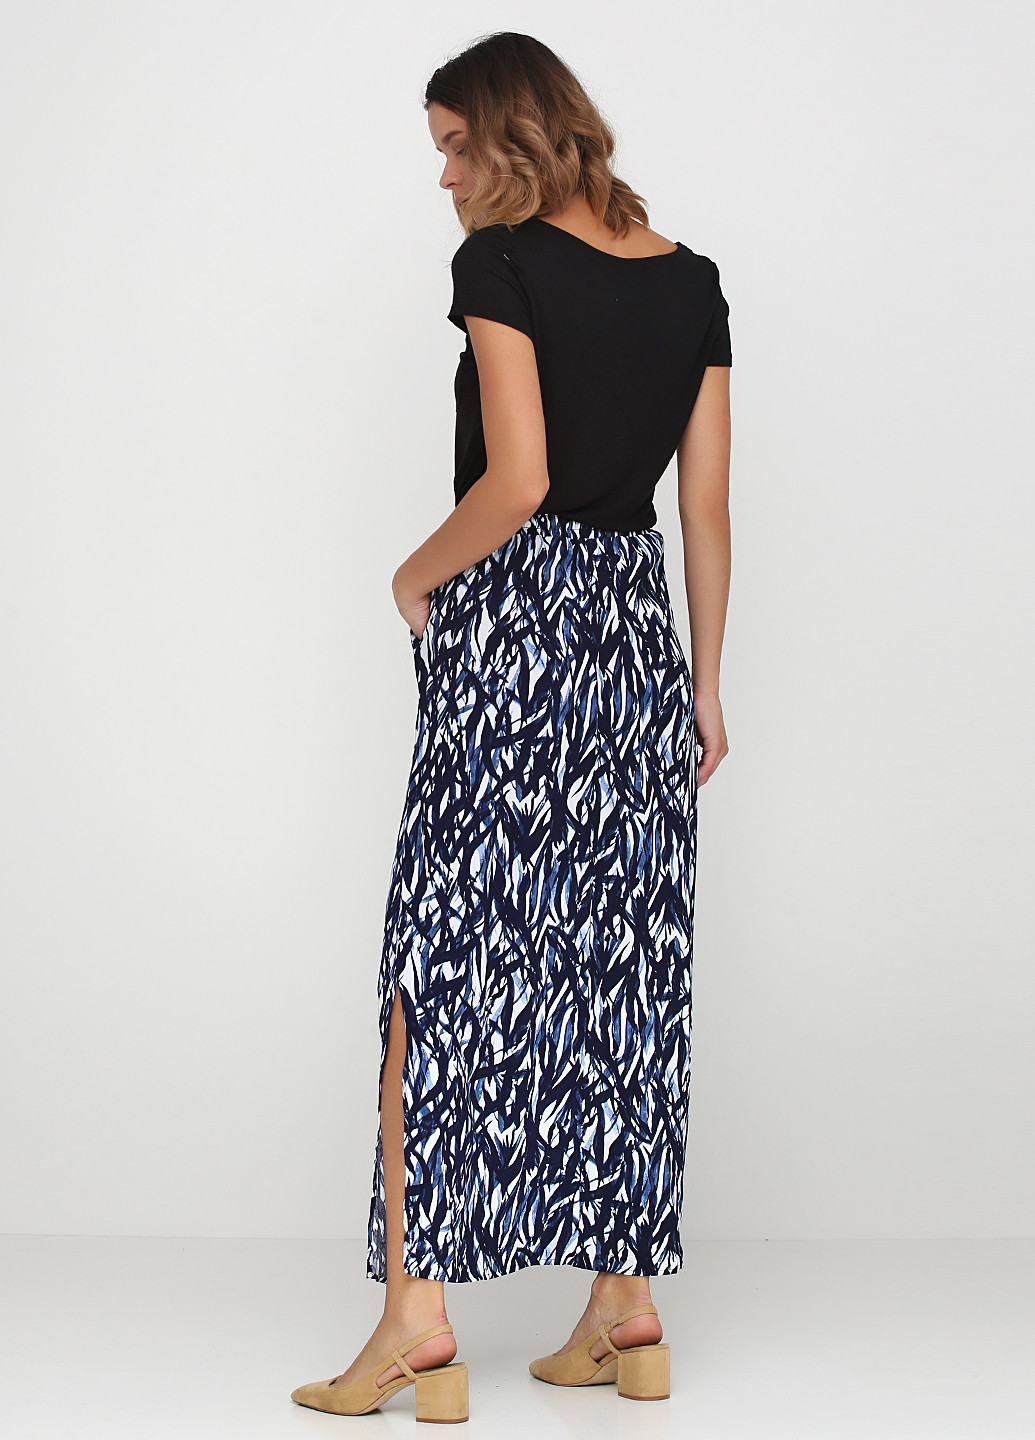 Темно-синяя кэжуал с абстрактным узором юбка H&M макси